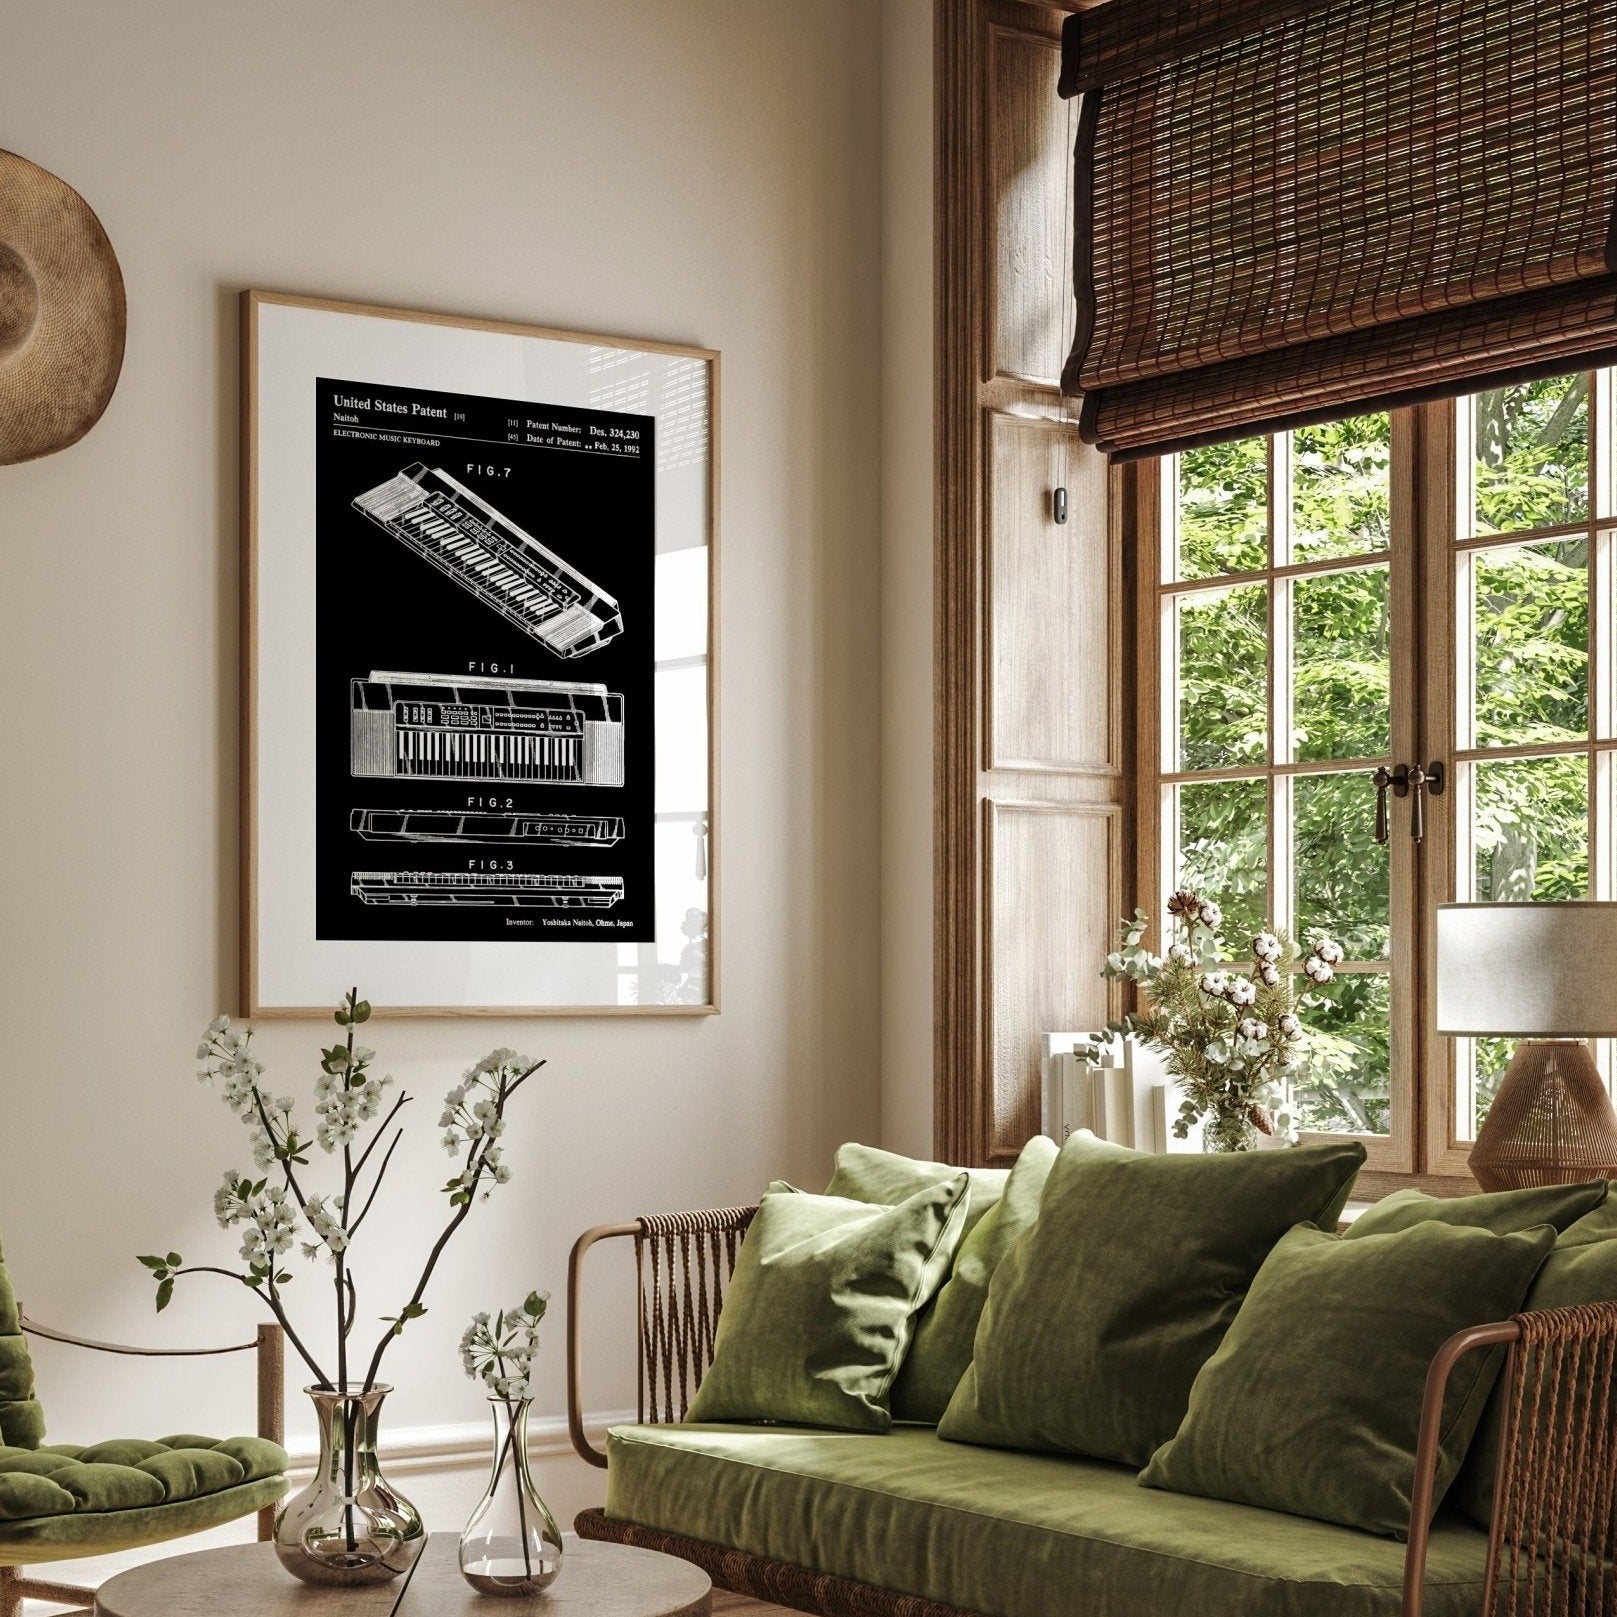 Casio Keyboard 1992 Patent Print - Magic Posters